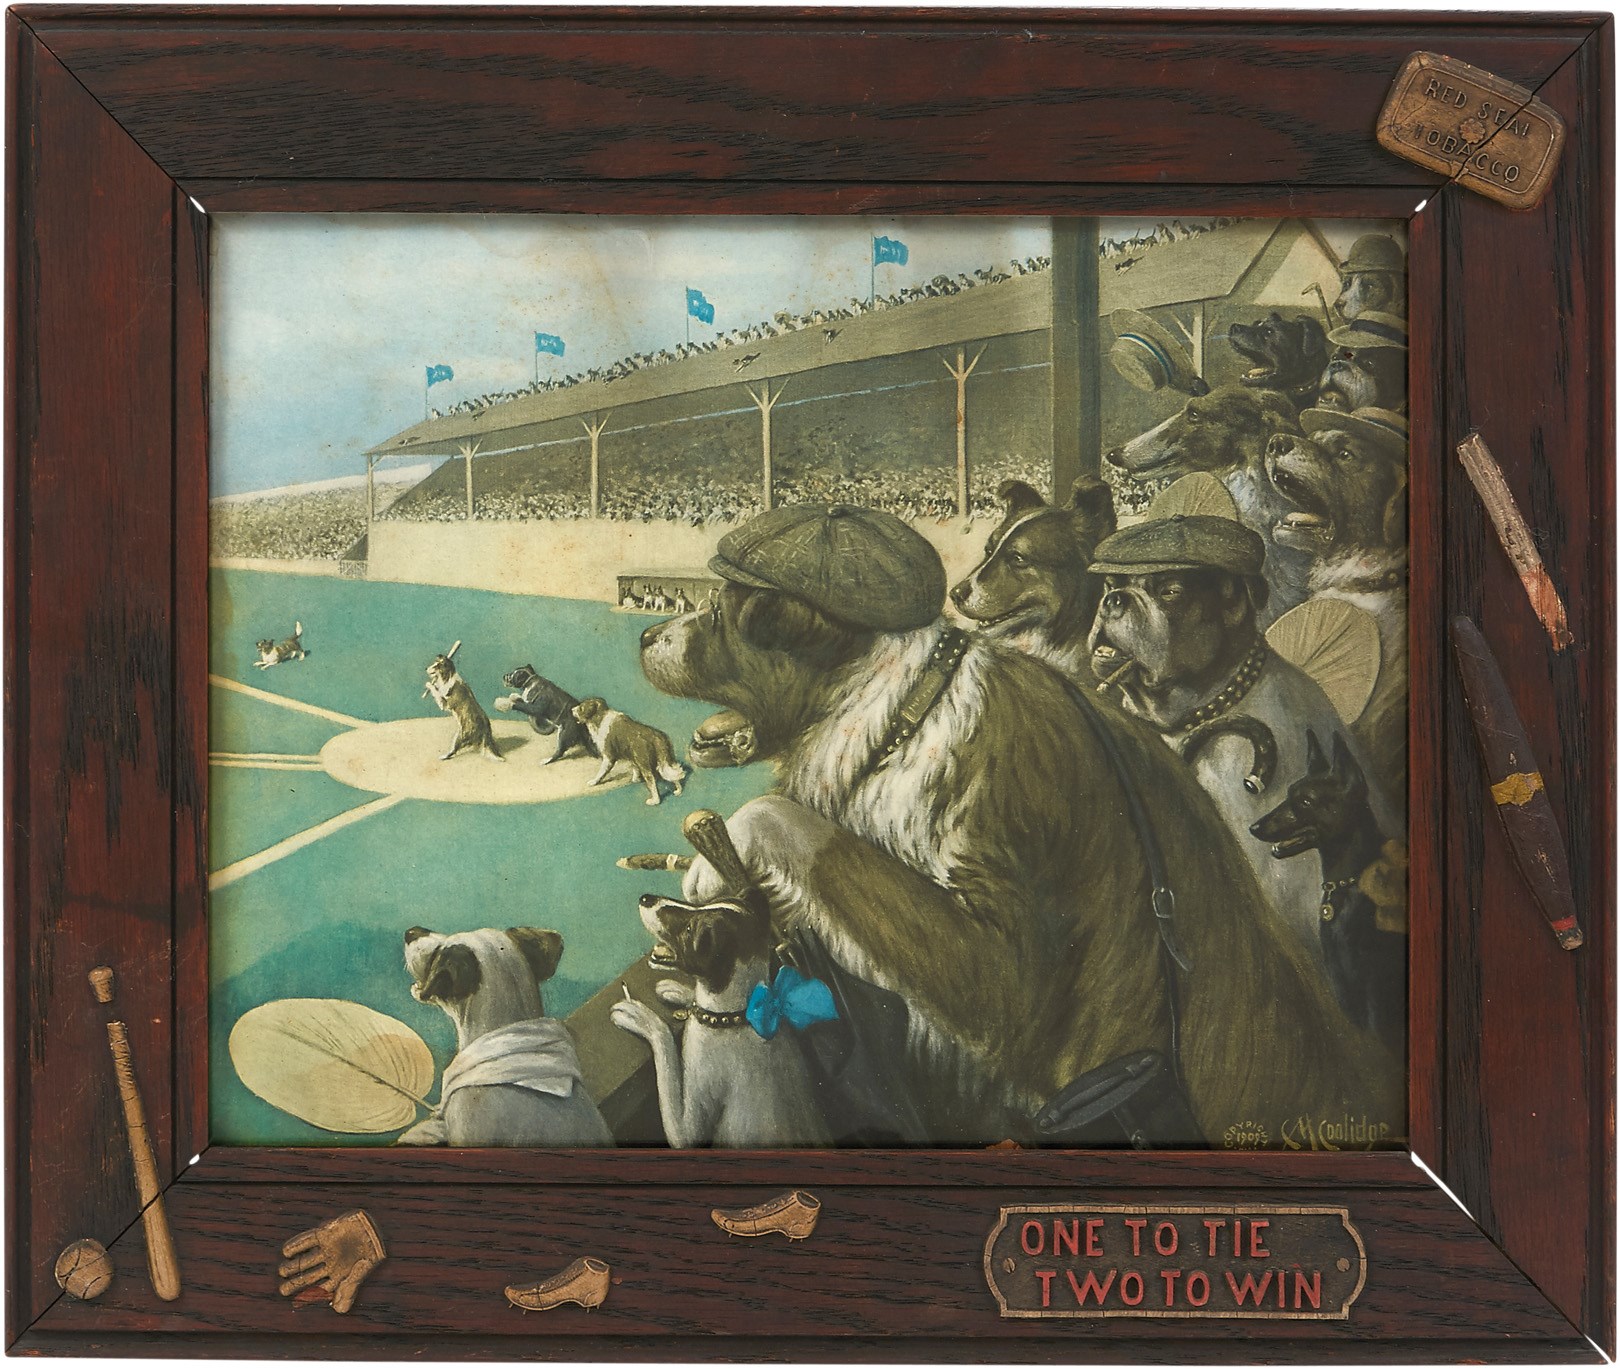 - 1909 Dogs Playing Baseball Print in Original Tobacco Advertising Frame